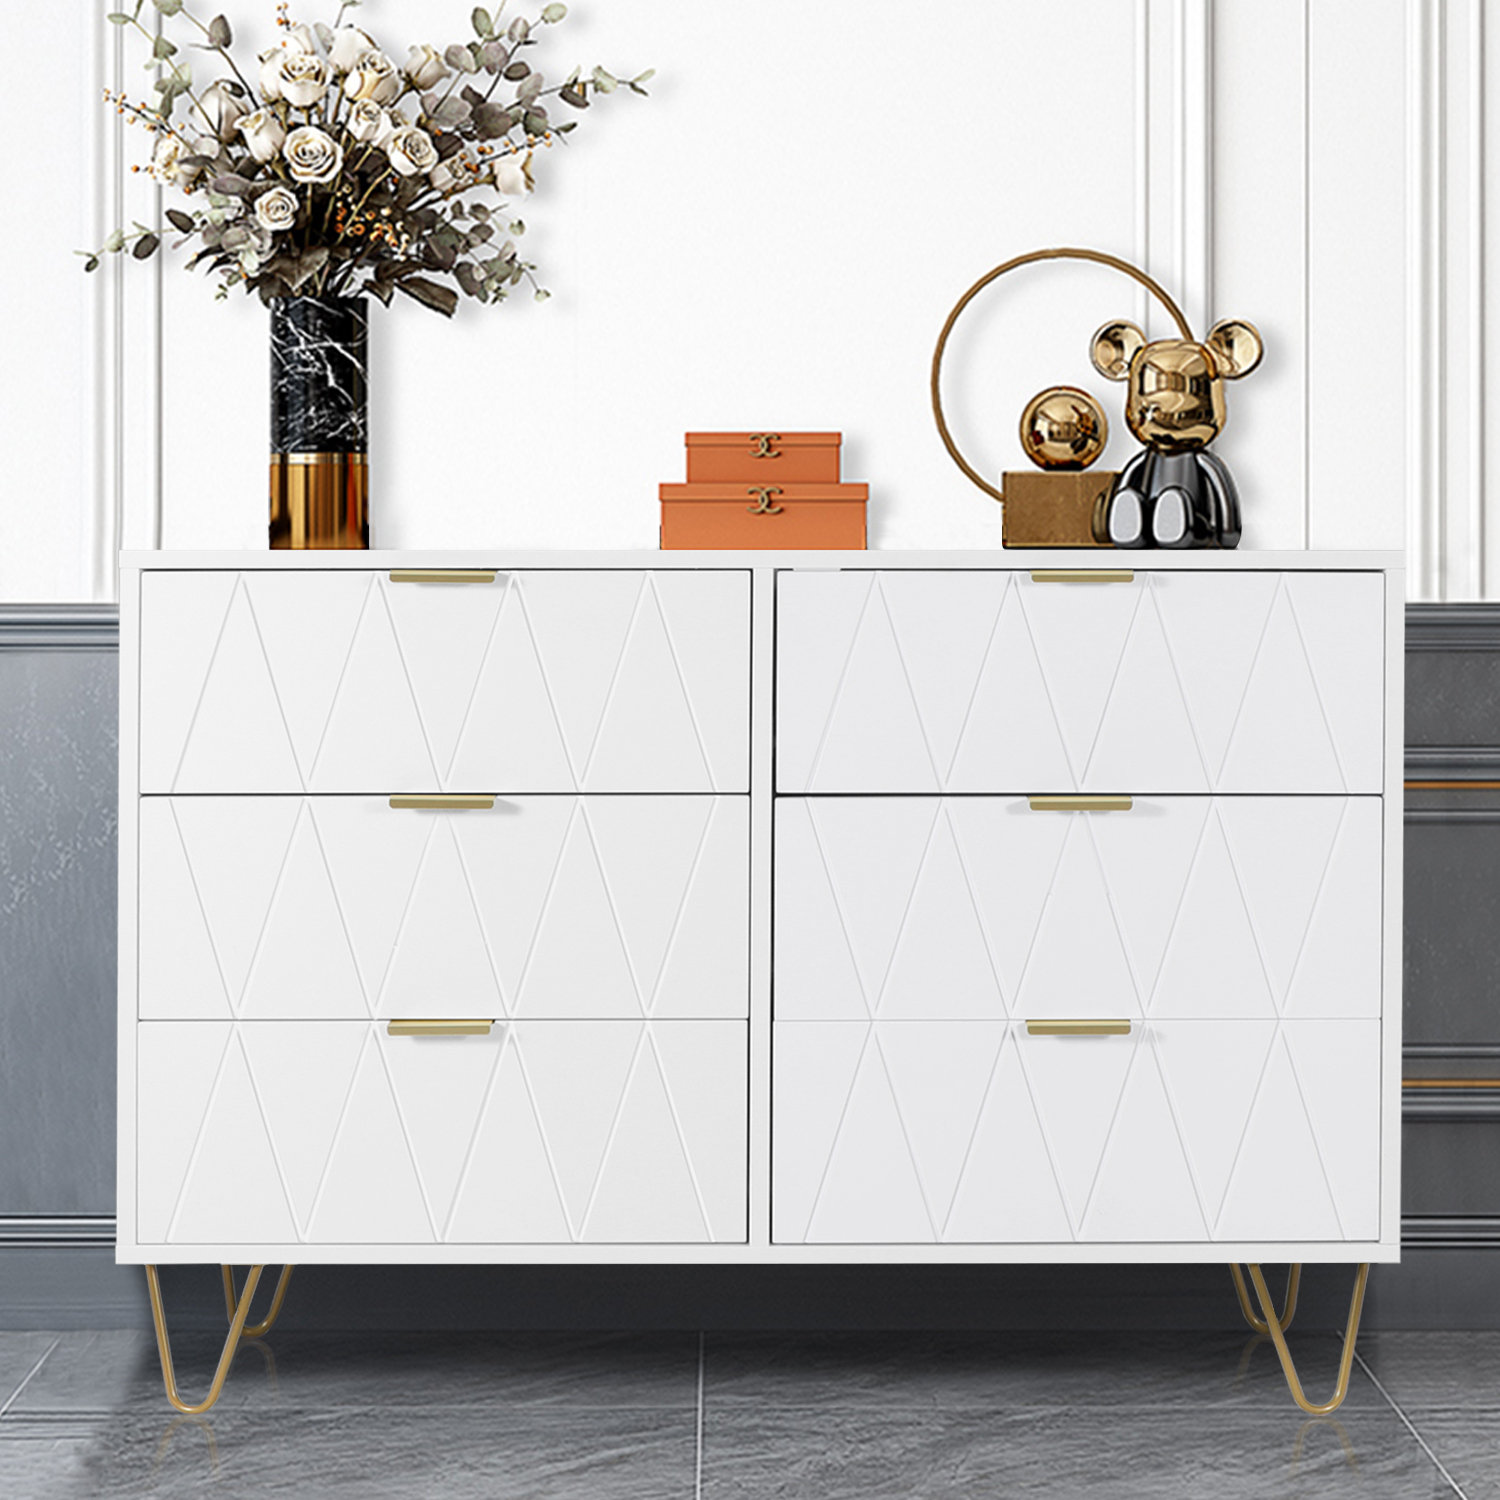 & Willa Wayfair Reviews | Dresser Marable Arlo Interiors